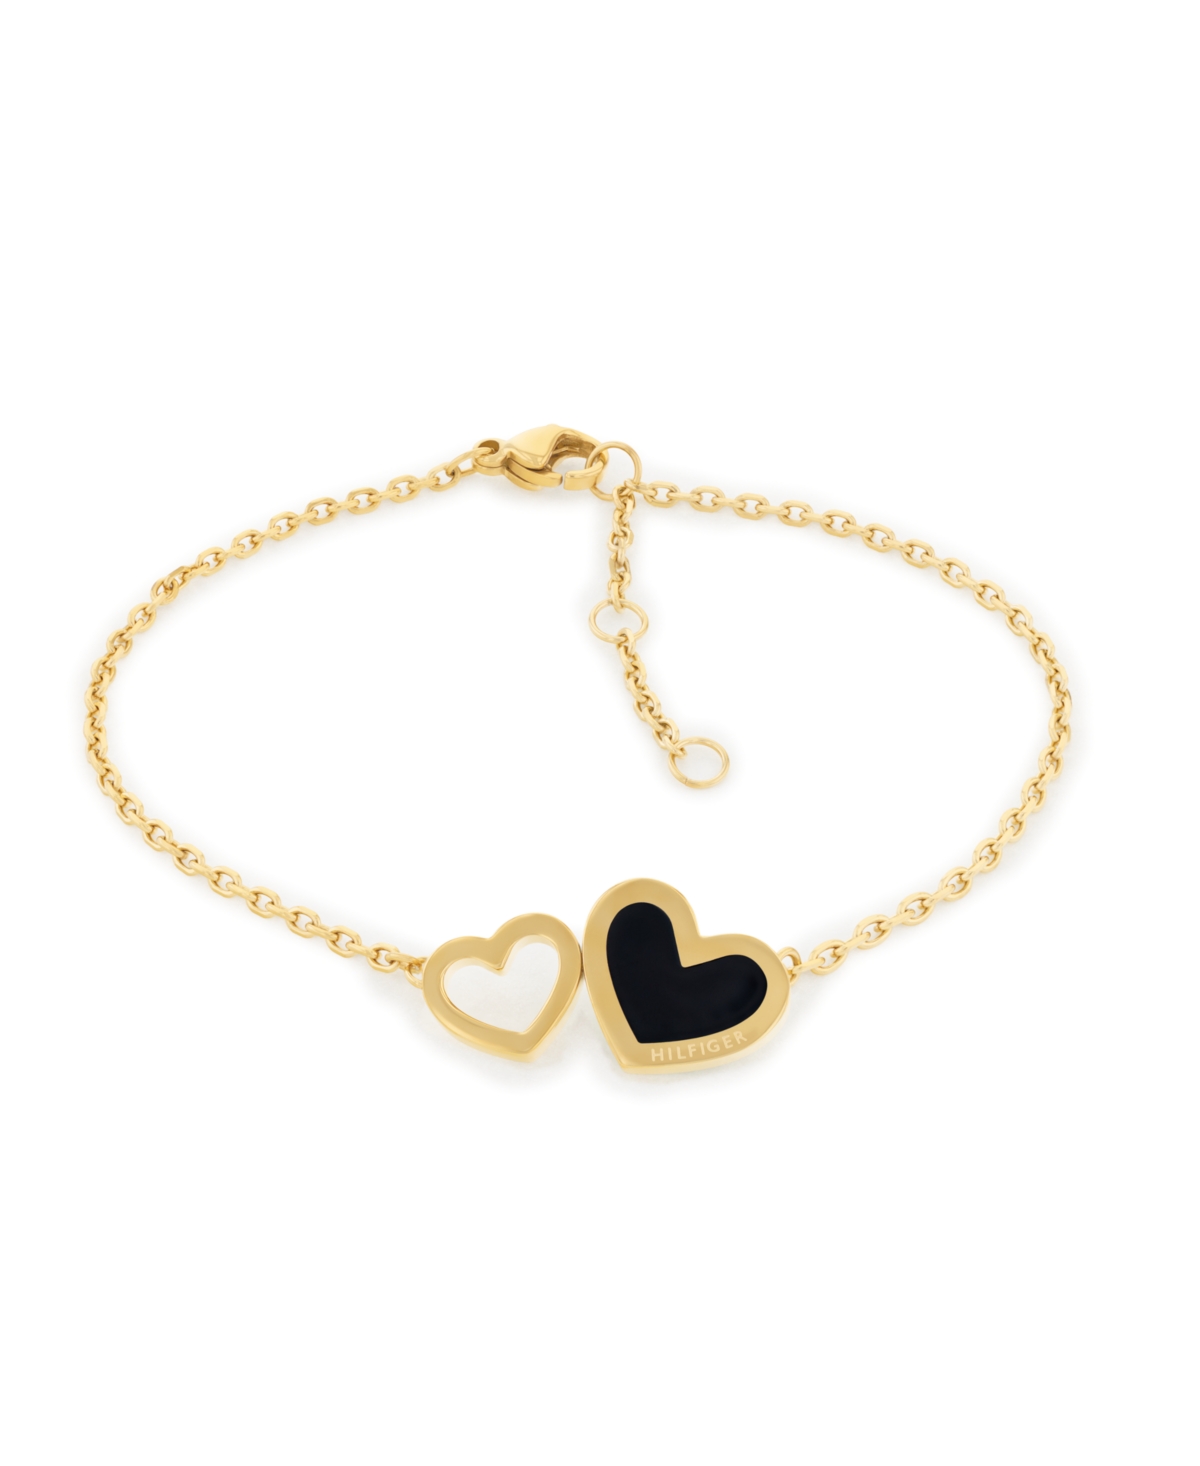 Tommy Hilfiger Black Enamel Heart Bracelet In 18k Gold Plated